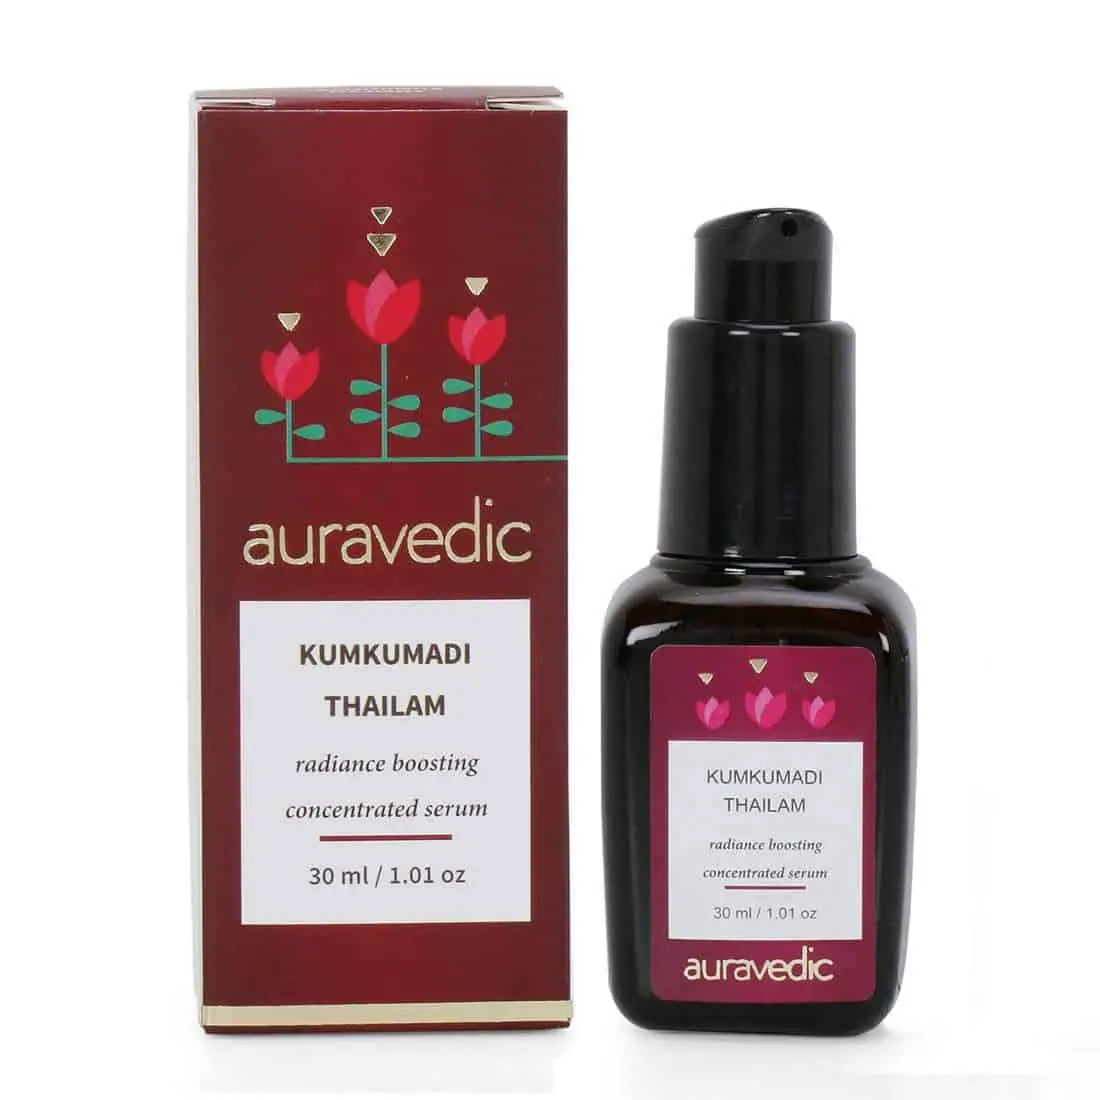 Auravedic Kumkumadi Thailam Radiance Boosting Concentrated Serum